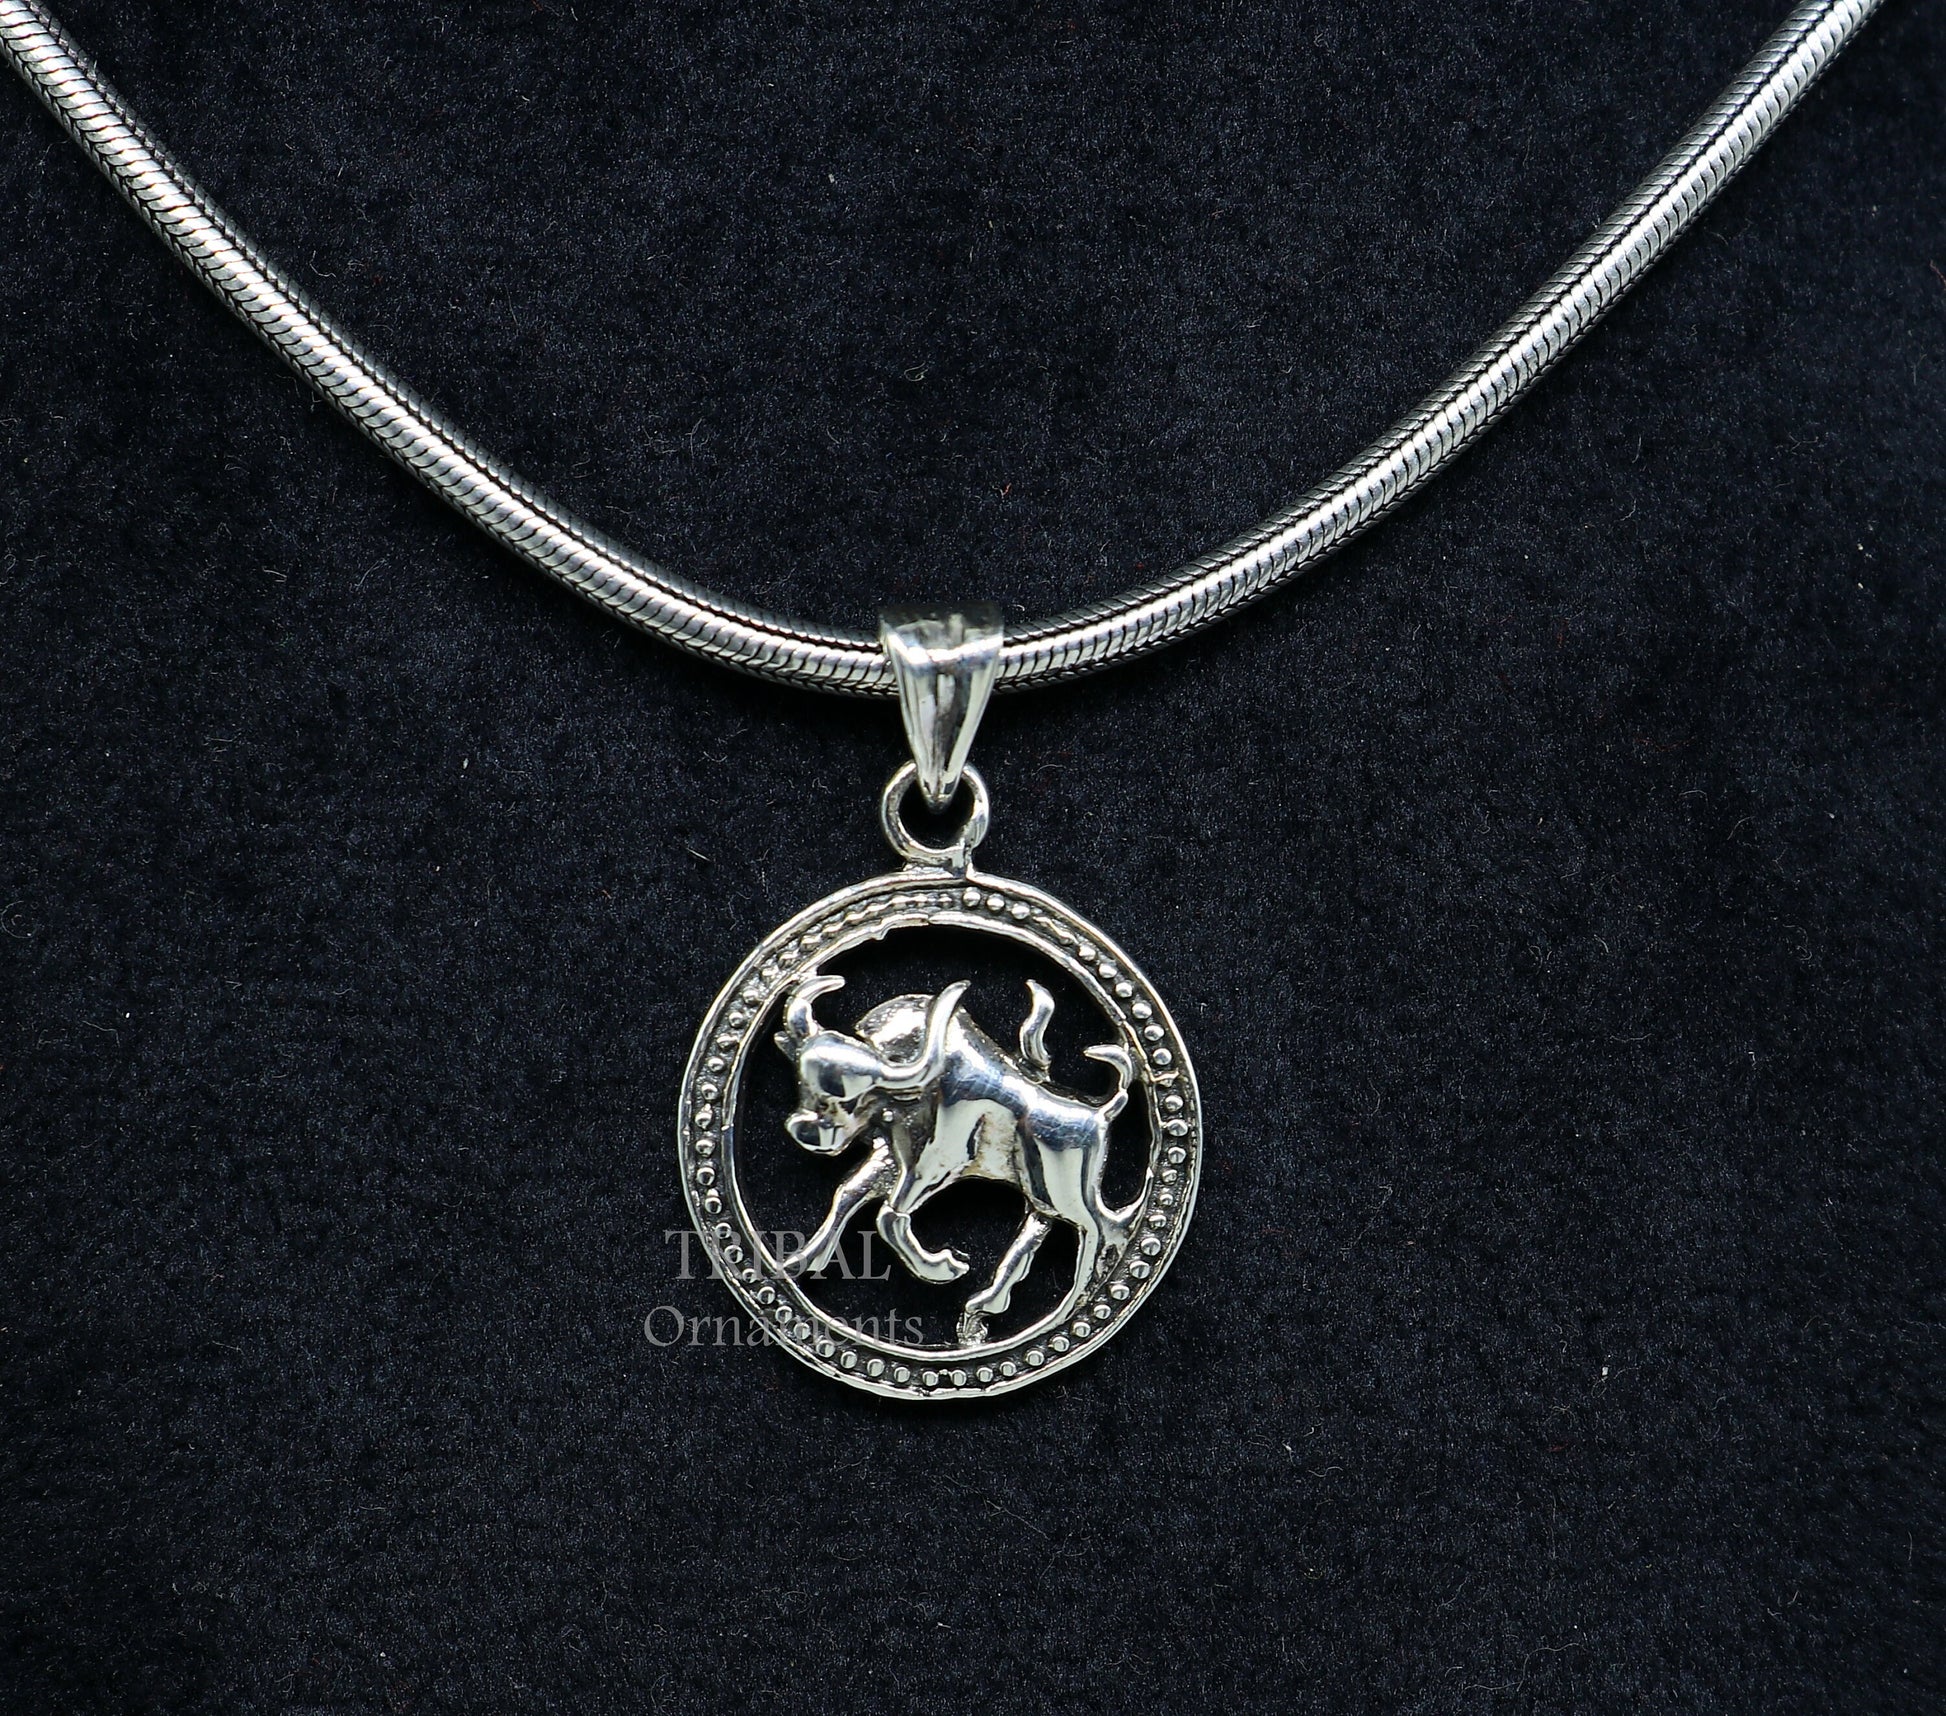 925 sterling silver unique horoscope zodiac Taurus sign/ symbol pendant unique Vrishbh Rashi symbol pendant best ethnic jewelry nsp573 - TRIBAL ORNAMENTS